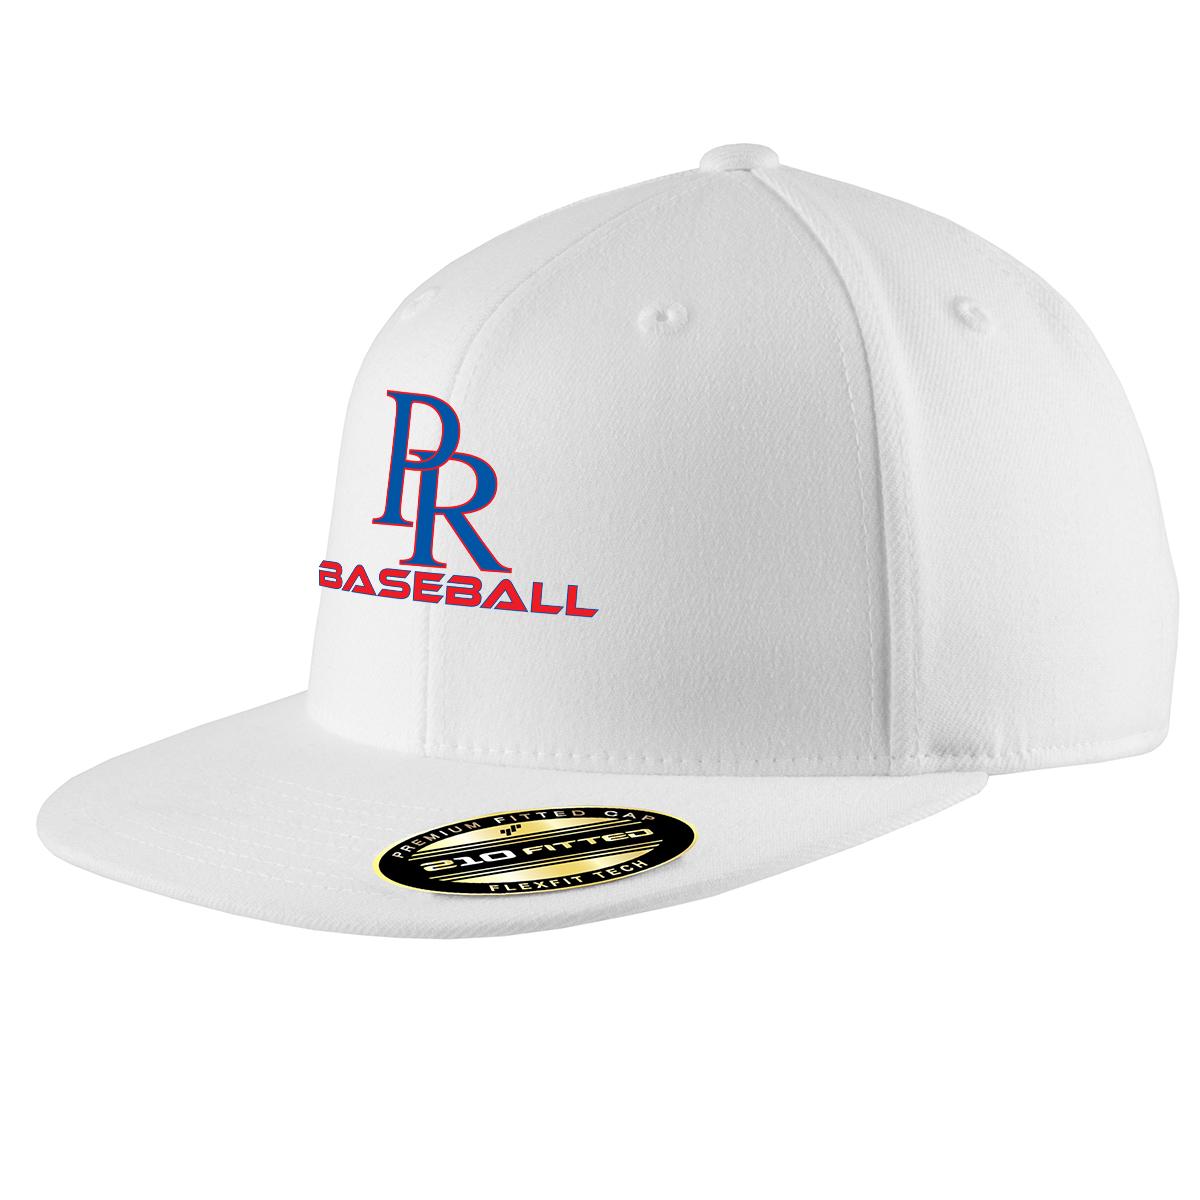 PR Baseball FlexFit Flat-Brim Hat